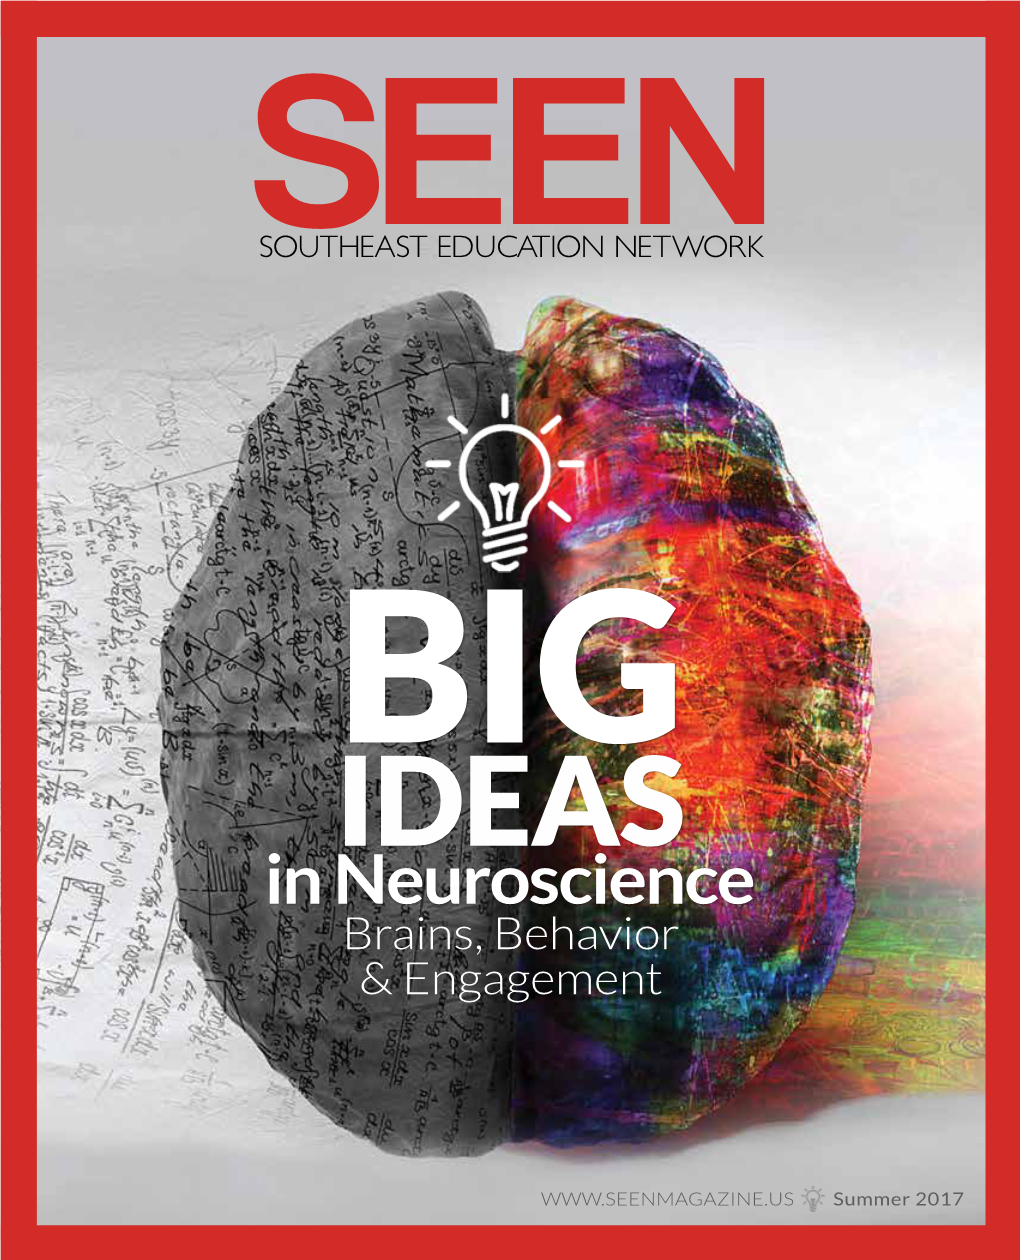 In Neuroscience Brains, Behavior & Engagement